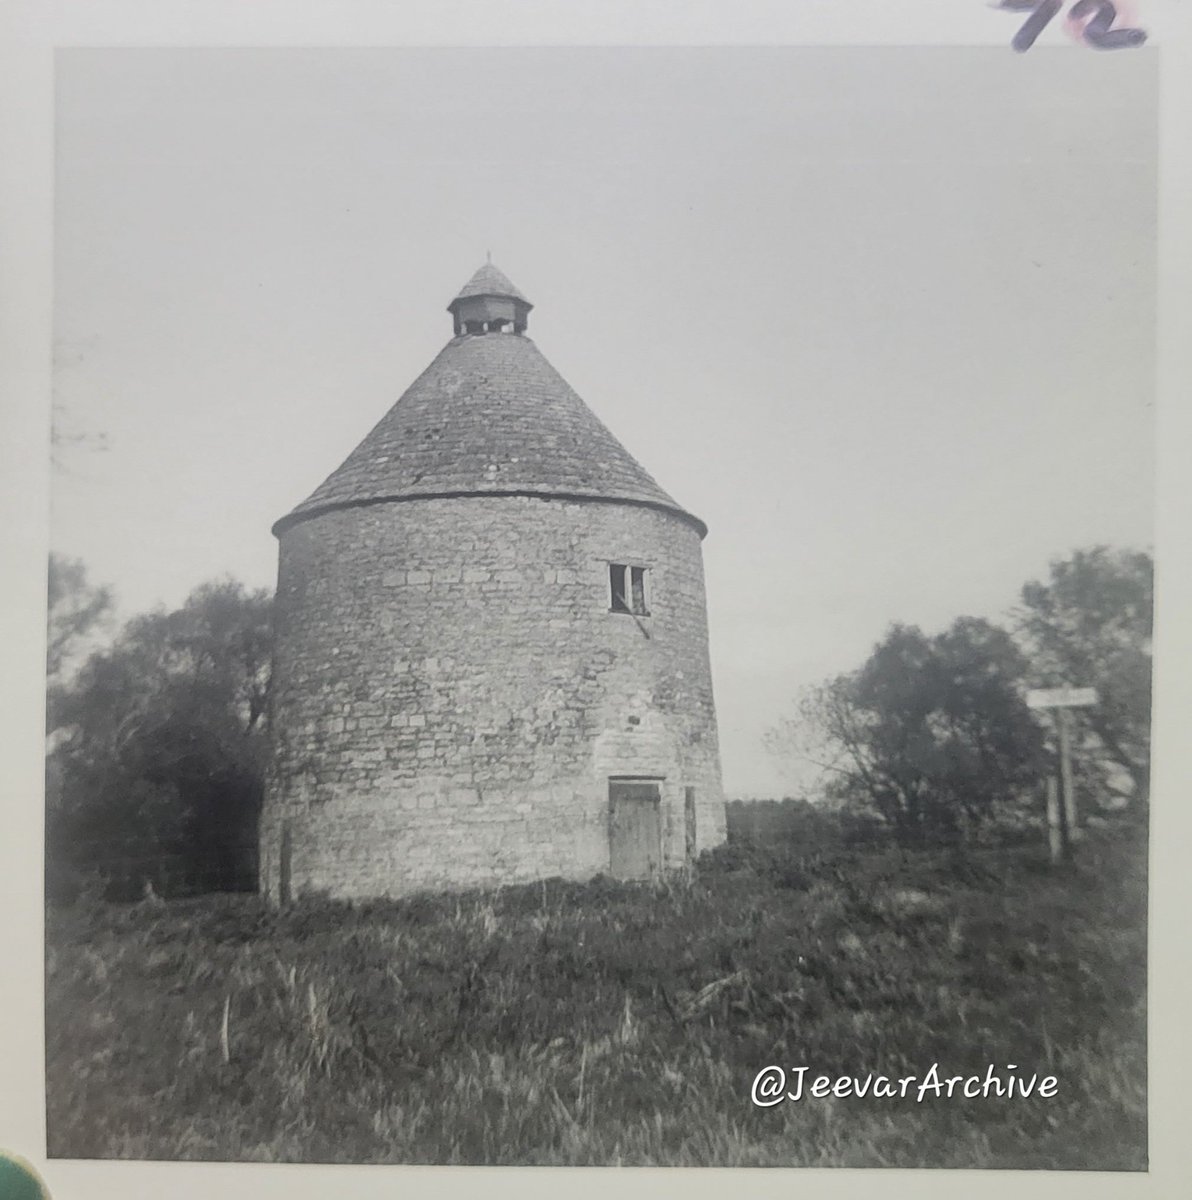 Dovecote at Eaglethorpe Farm, Warmington, Northamptonshire 

1974
Grade II Listed Building

#dovecote #gradeiilisted #northants #farmbuildings #heritage #oldbuilding #oldphoto #dovecot #rurallife #ruralengland #architecture #history #historicalphotos #vintage #photoarchive